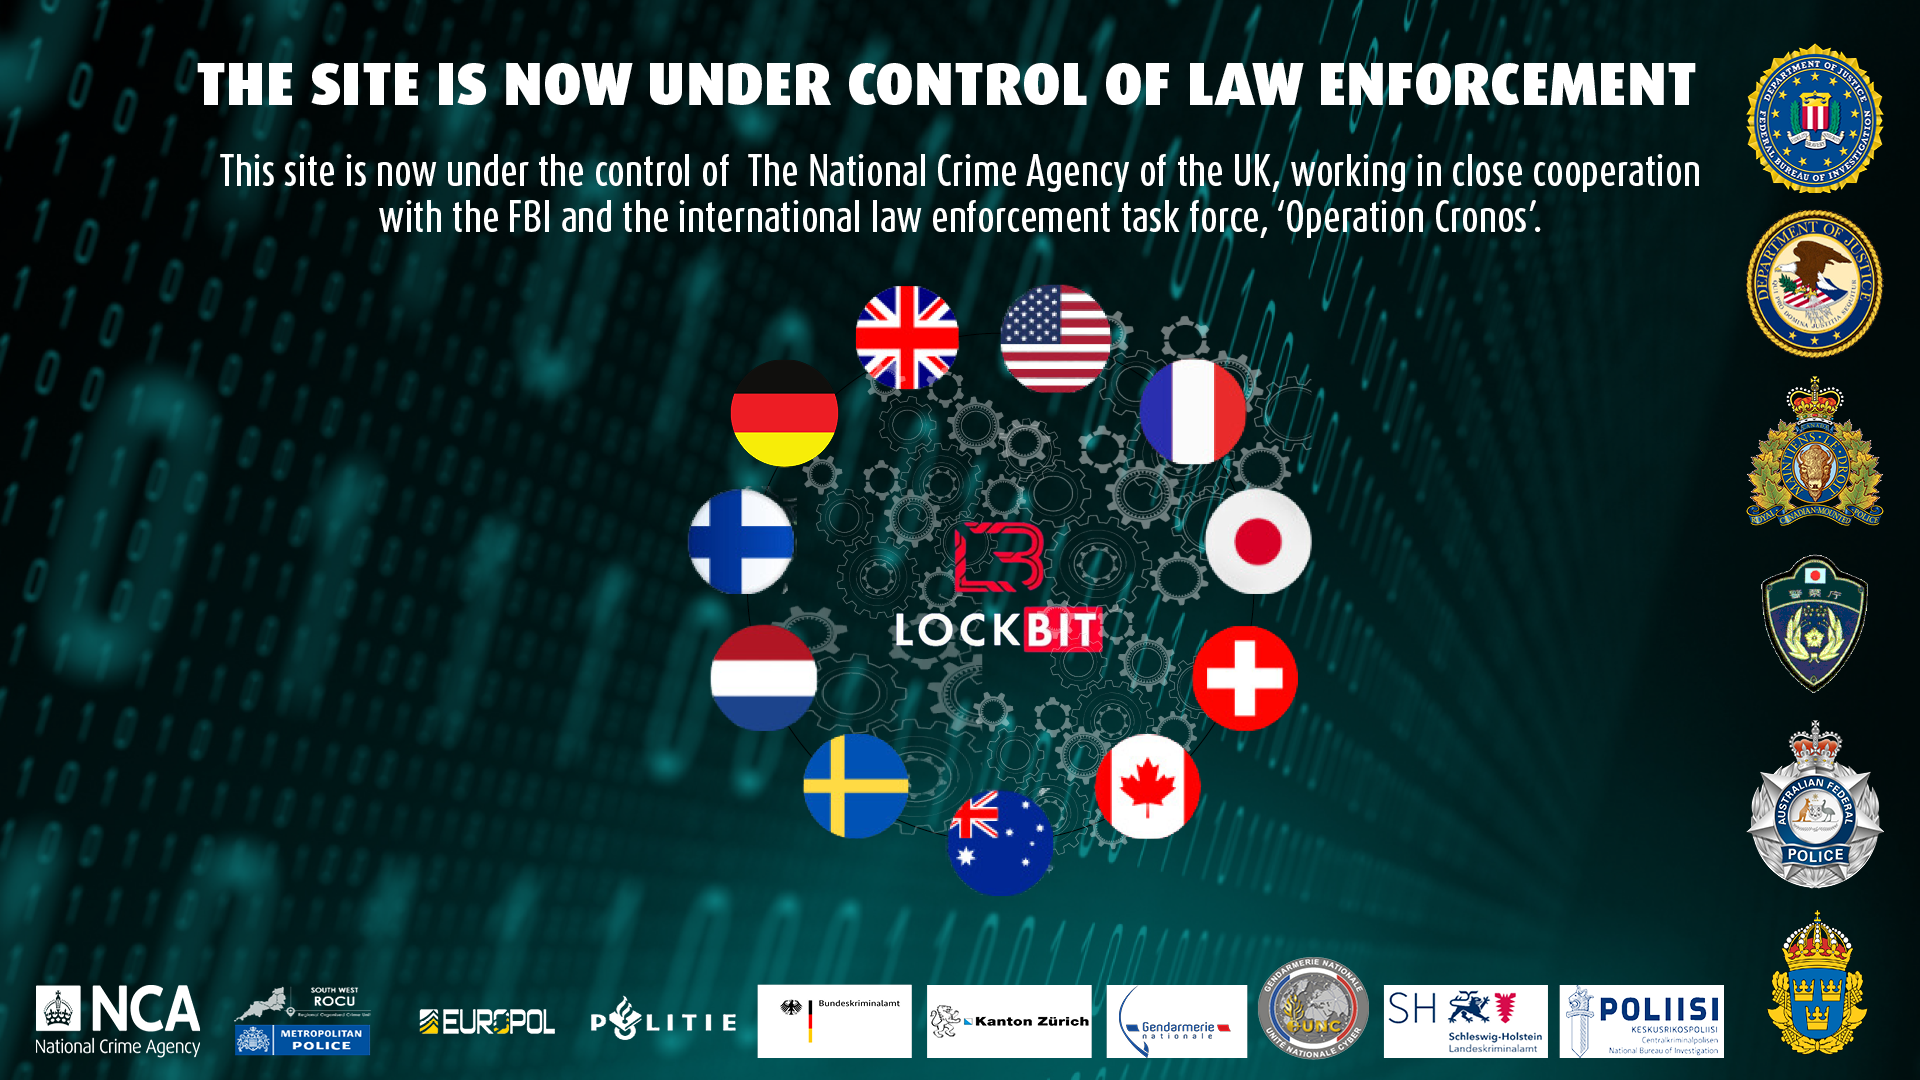 LockBit website seized by NCA and law enforcement agencies